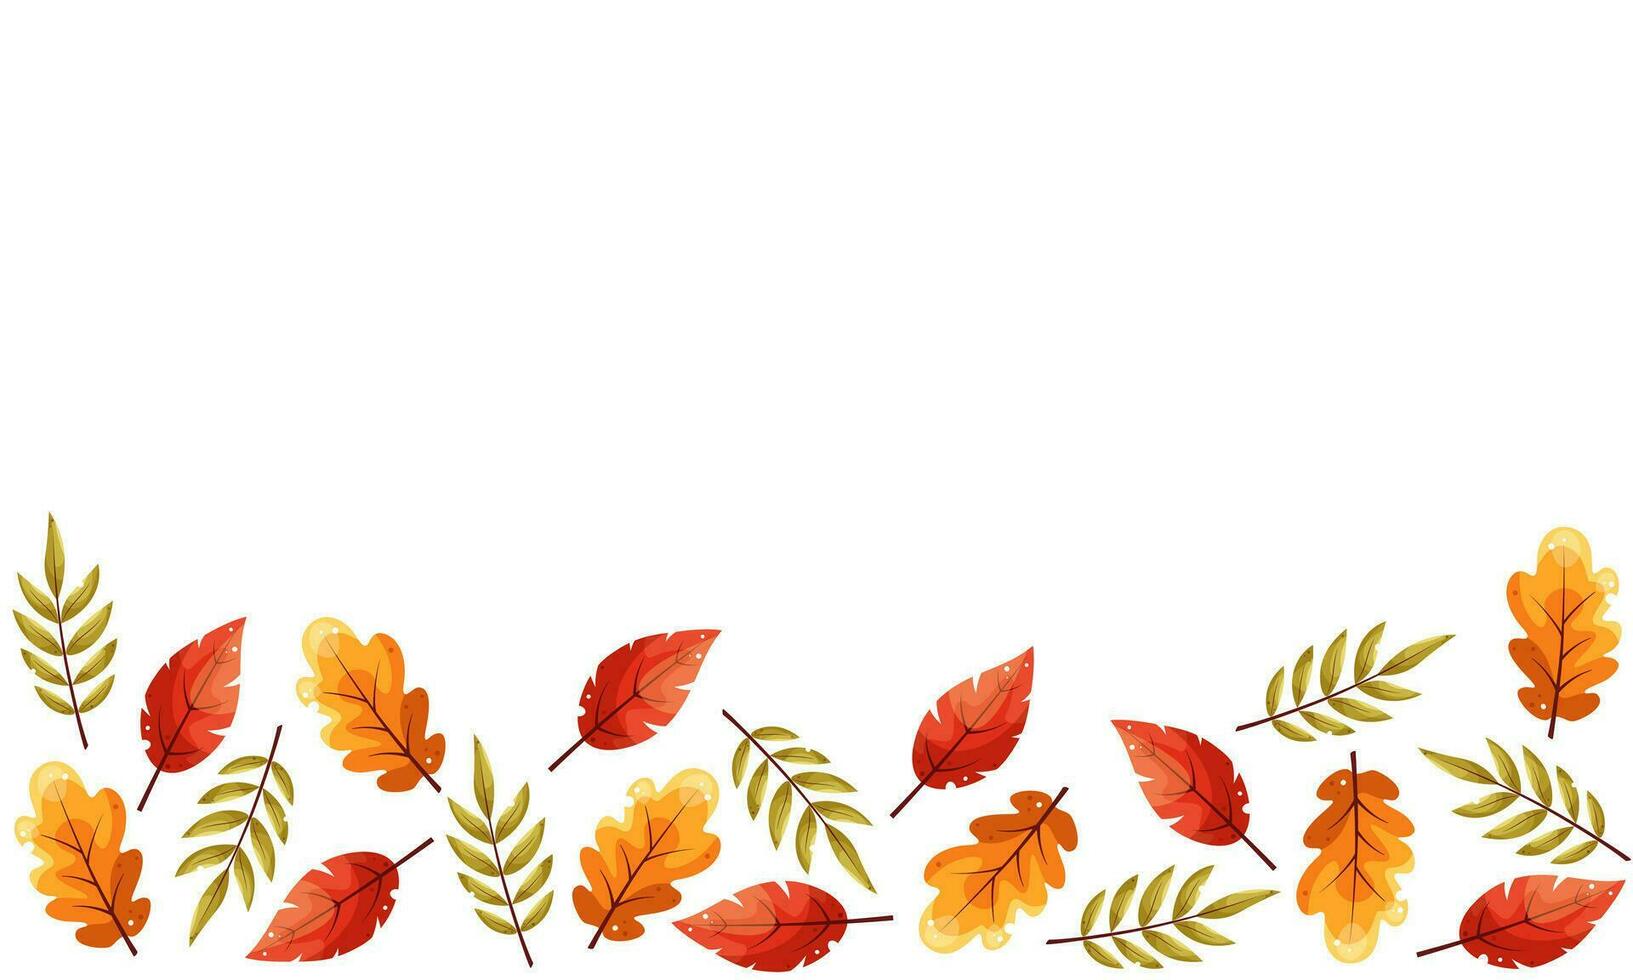 schön Herbst Blätter. horizontal Banner Muster mit Herbst hell Blätter Vorlage. eben Gekritzel Stil. Vektor Illustration. dekorativ Rand rahmen, Vektor Vorlage